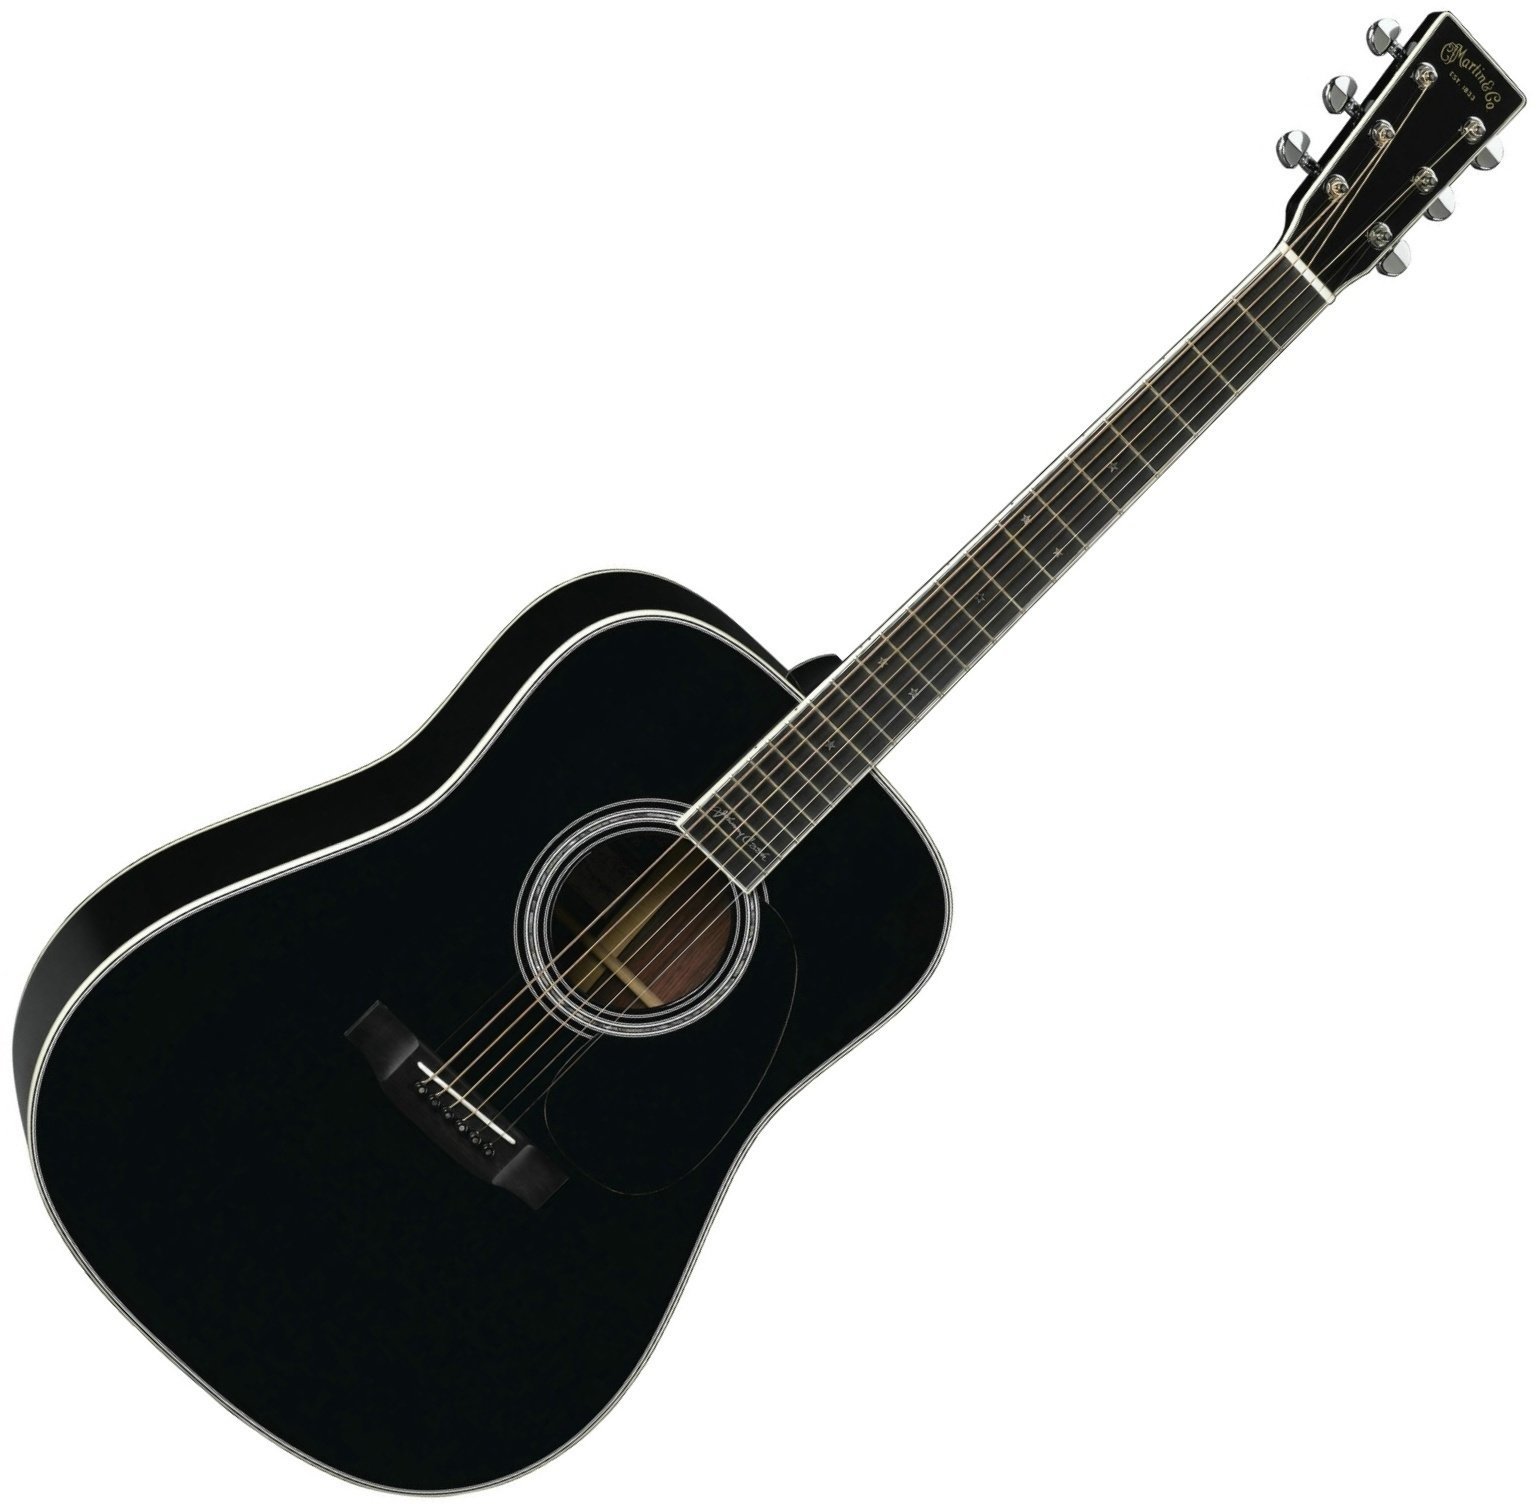 Signature Acoustic Guitar Martin D35 Johnny Cash